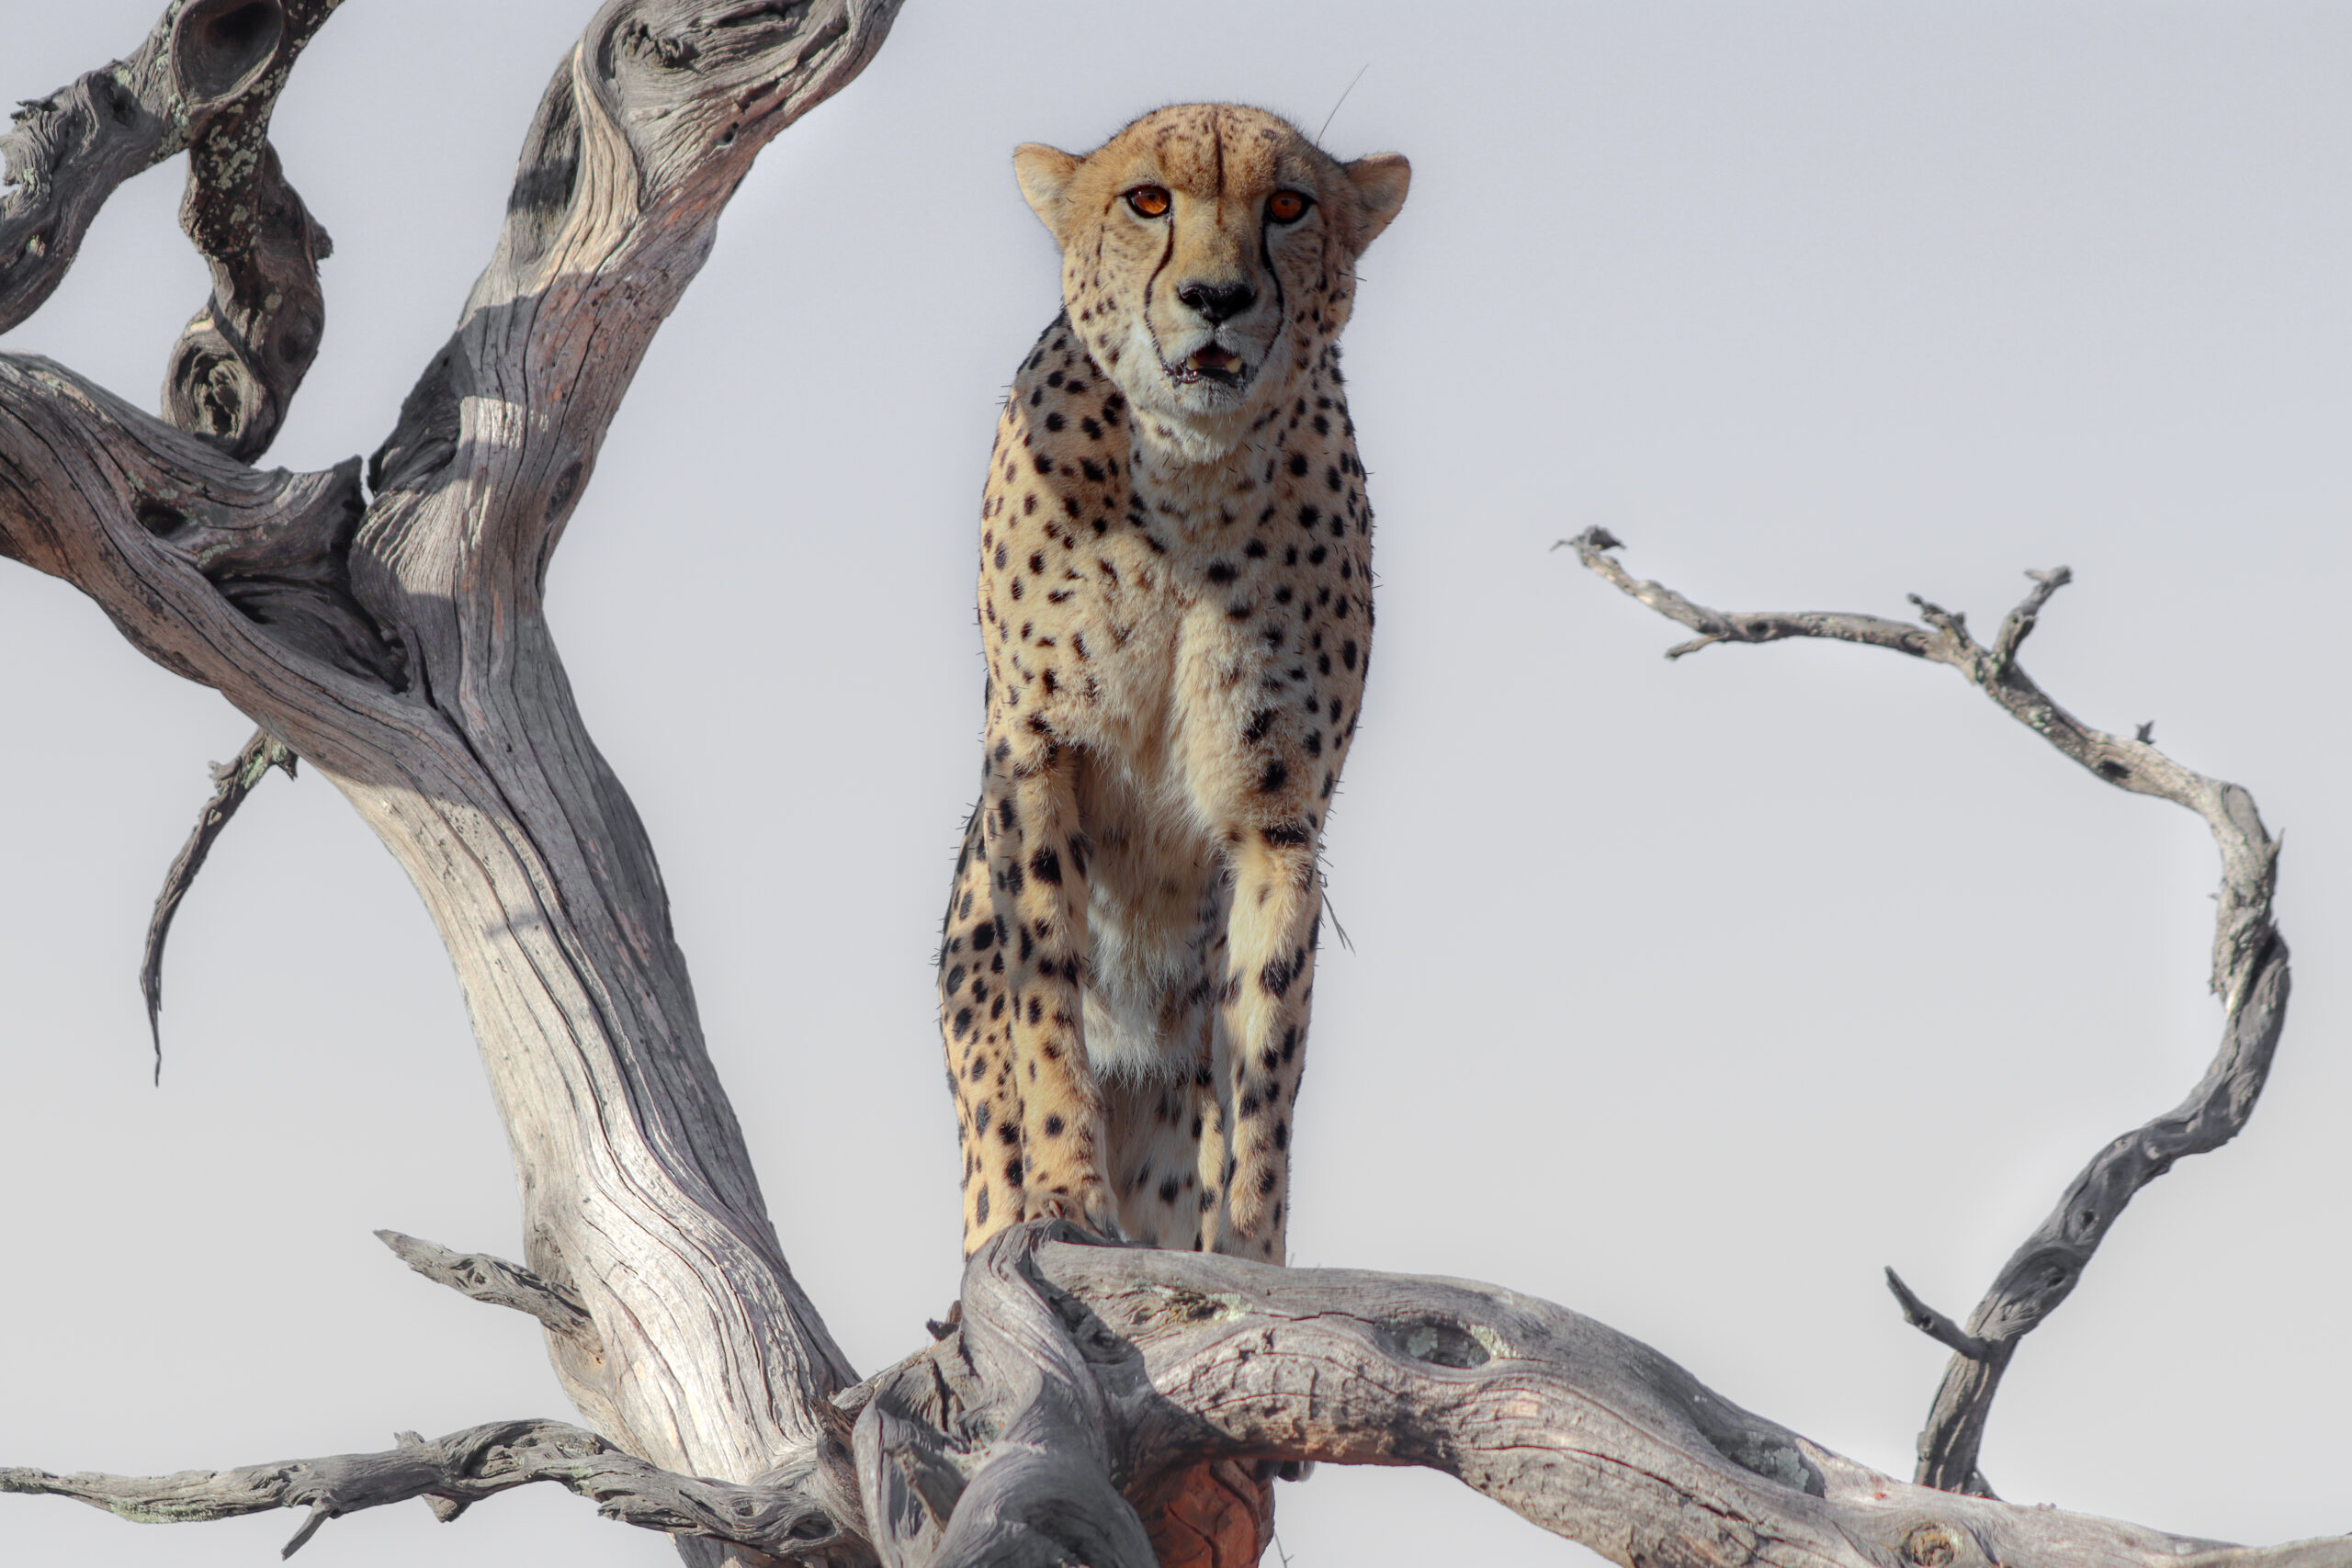 Wild cheetah in Namibia 